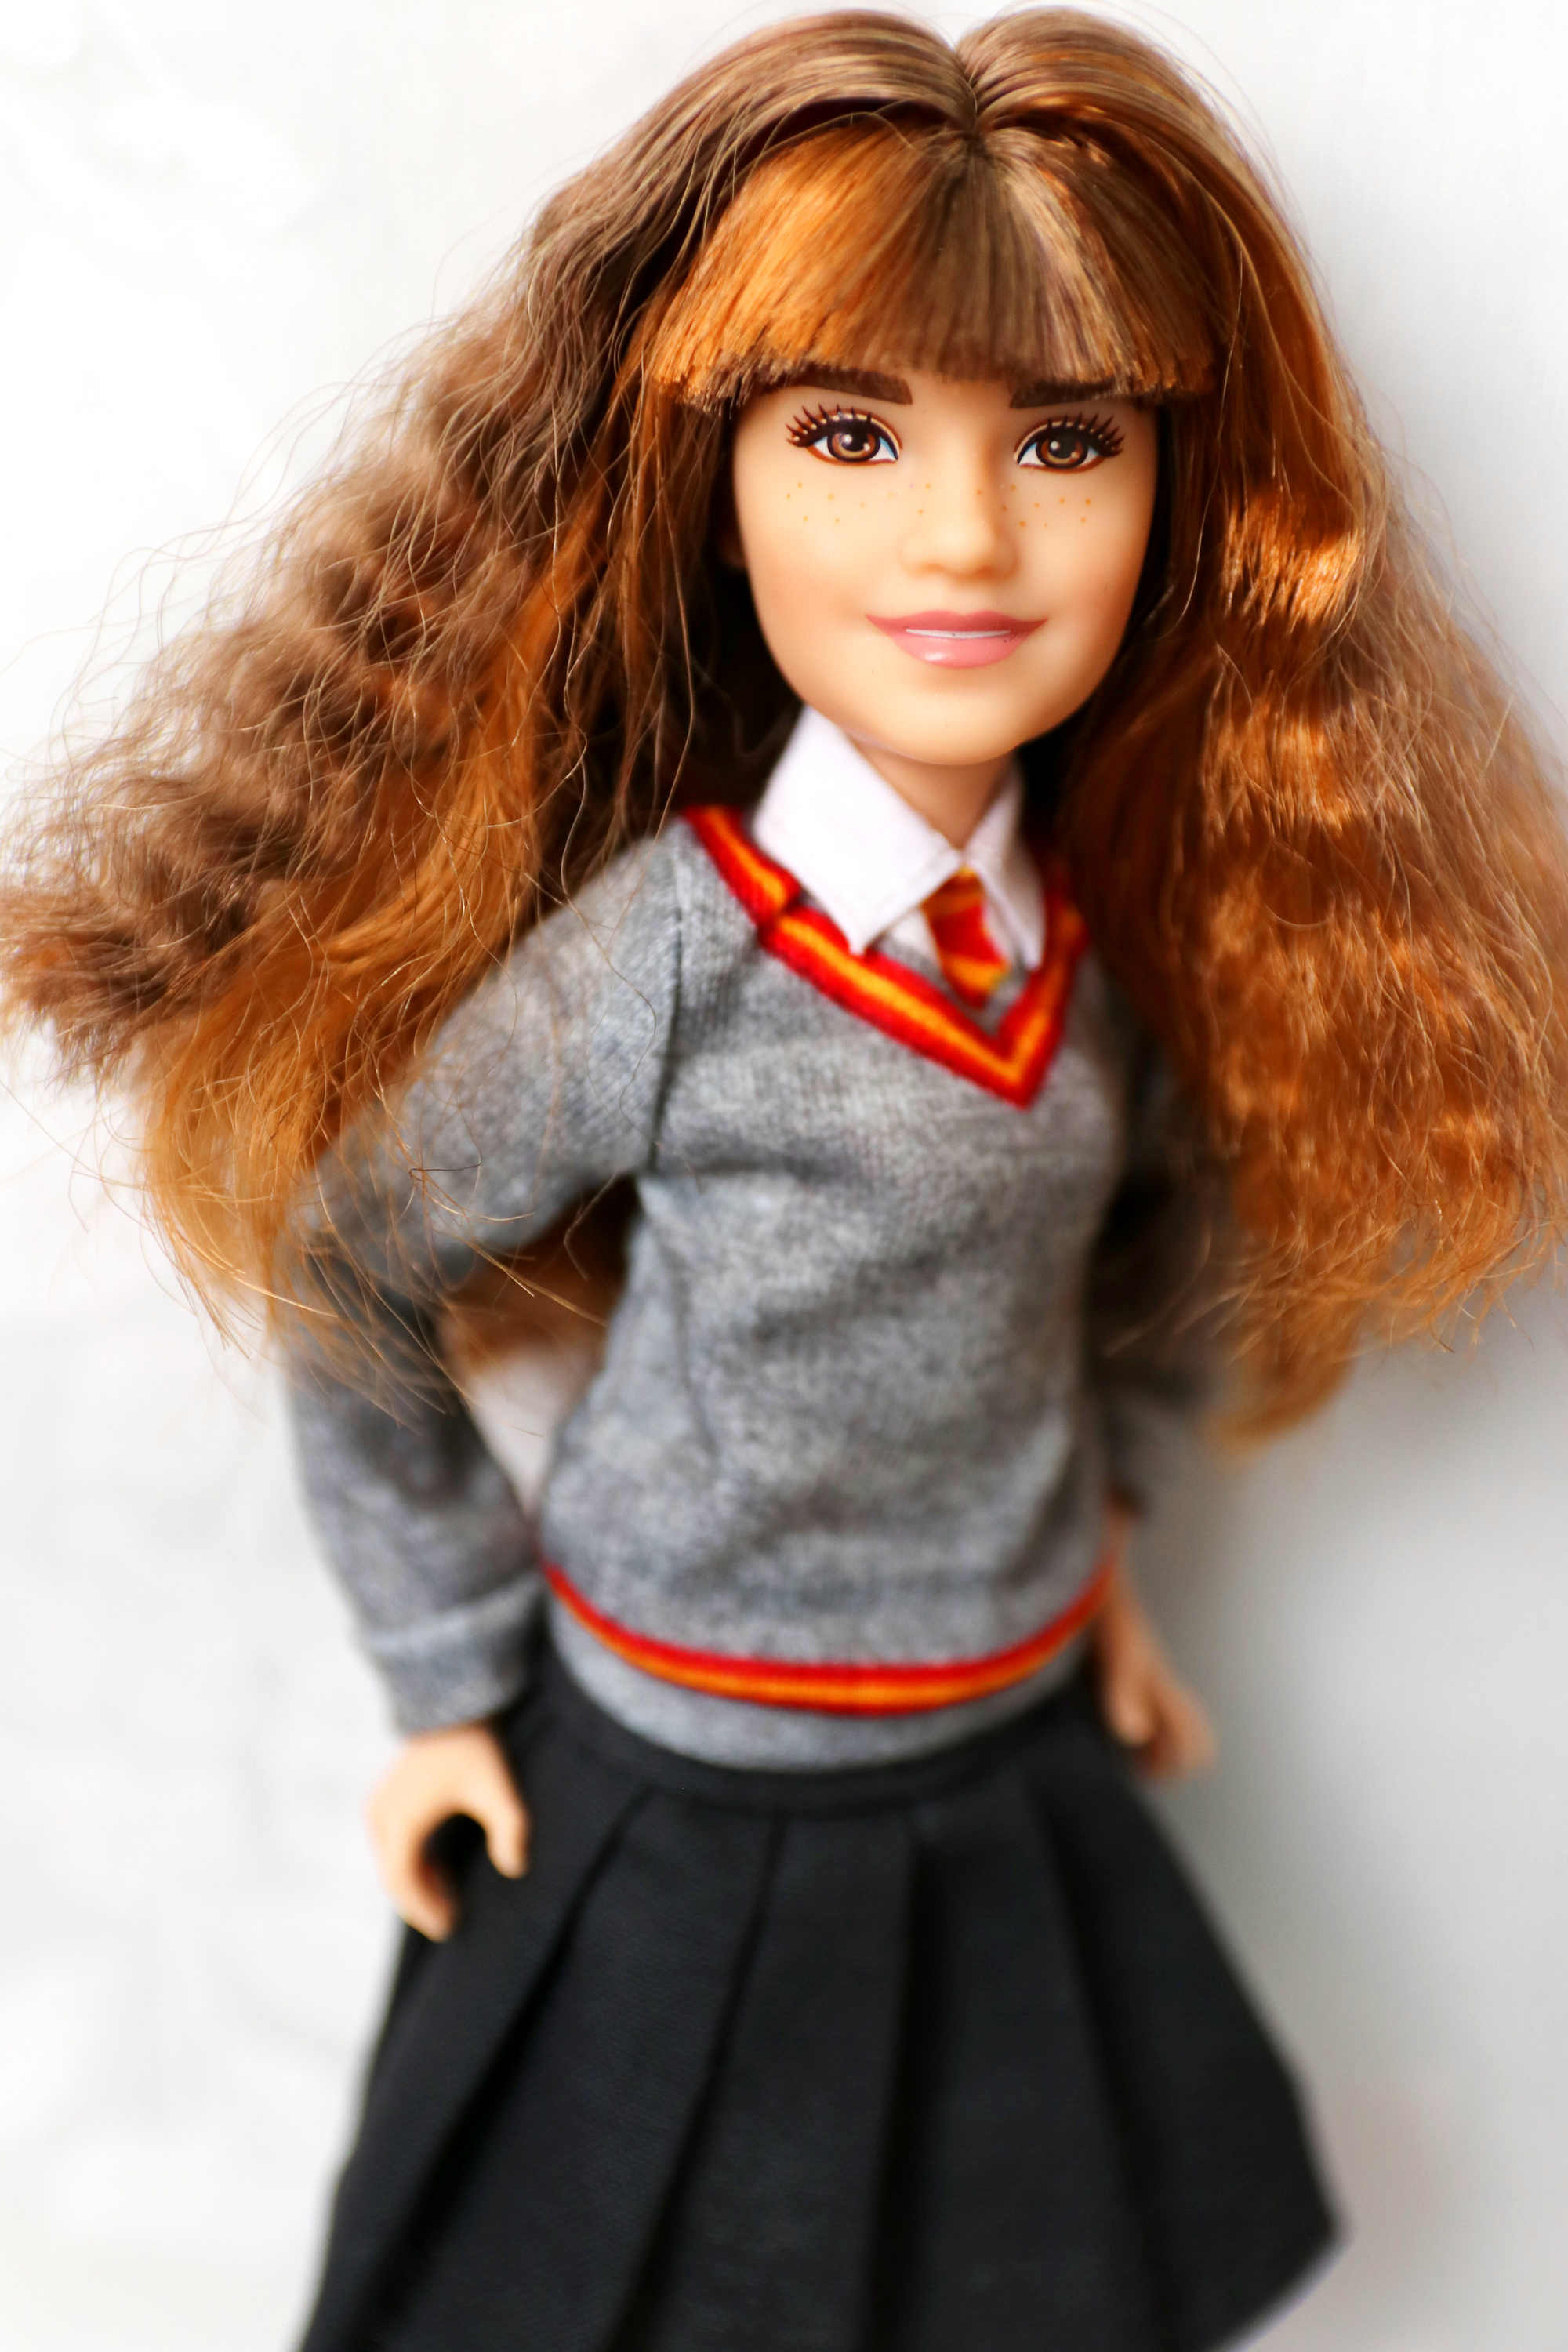 hermione harry potter doll